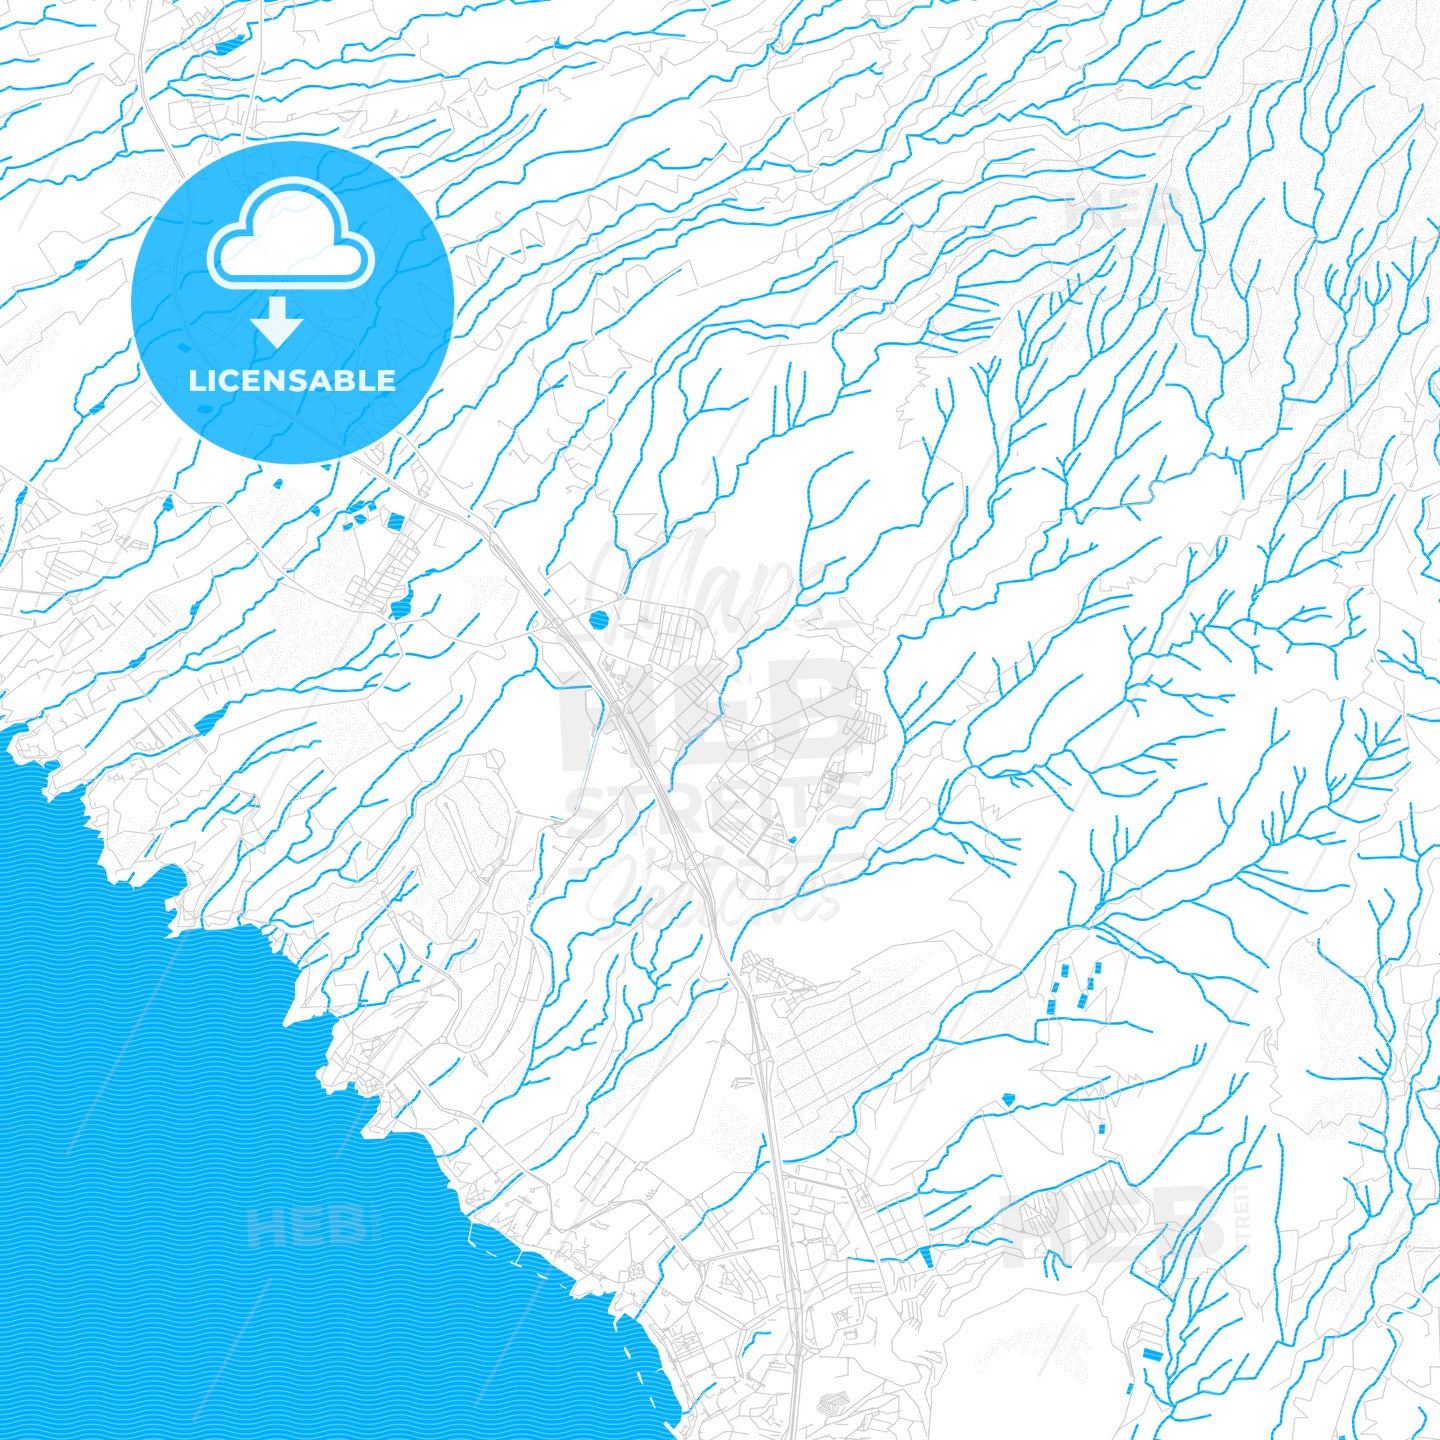 Adeje, Spain PDF vector map with water in focus